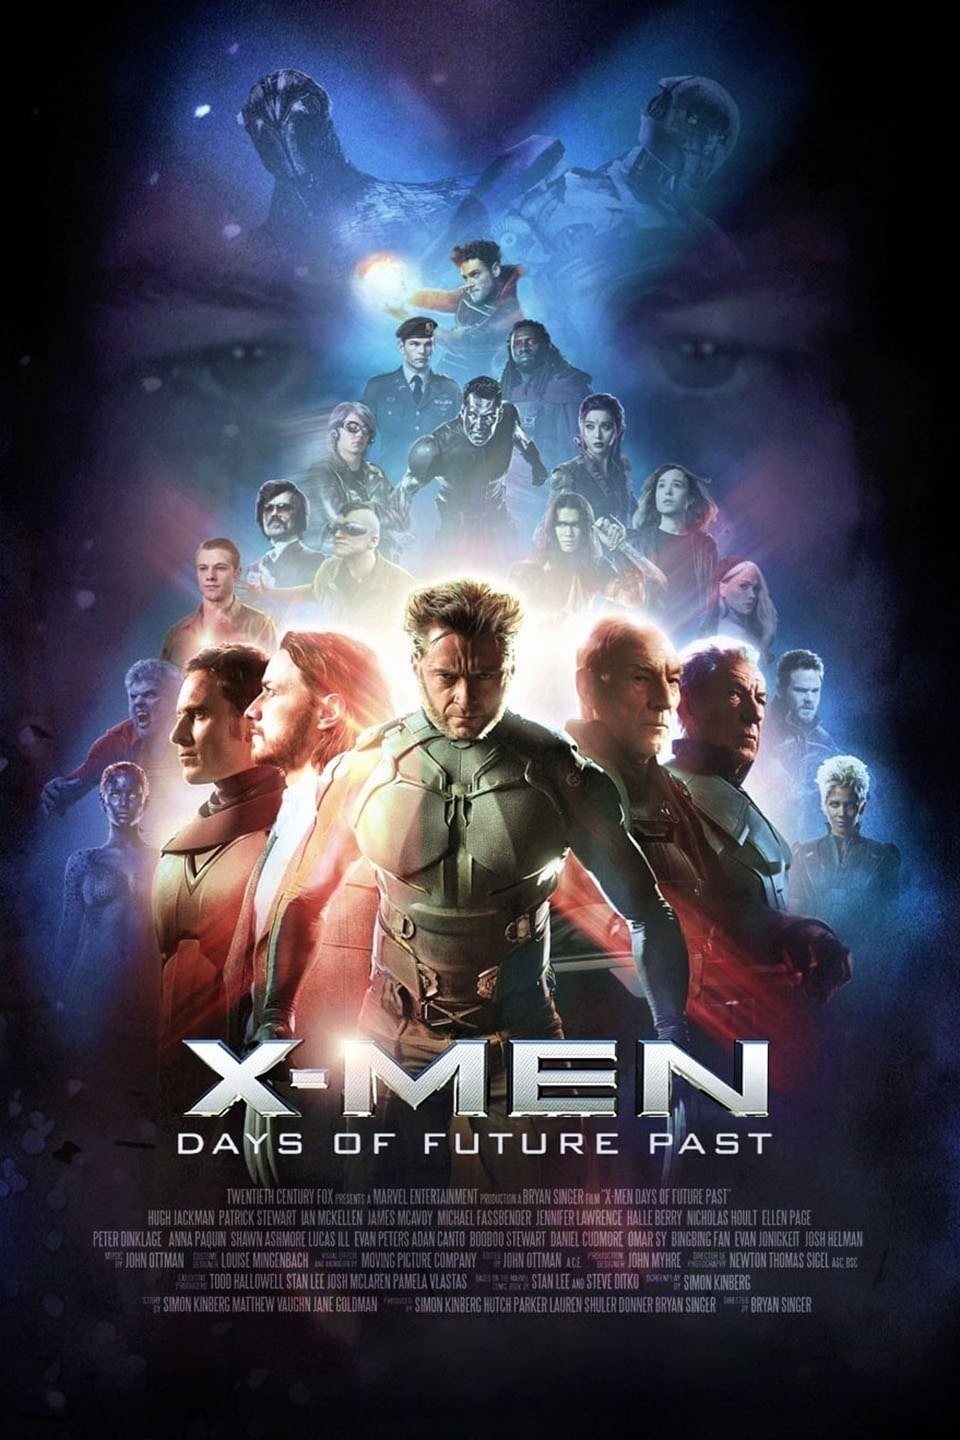 20th Century Fox logo - X-Men: The Last Stand trailer va…